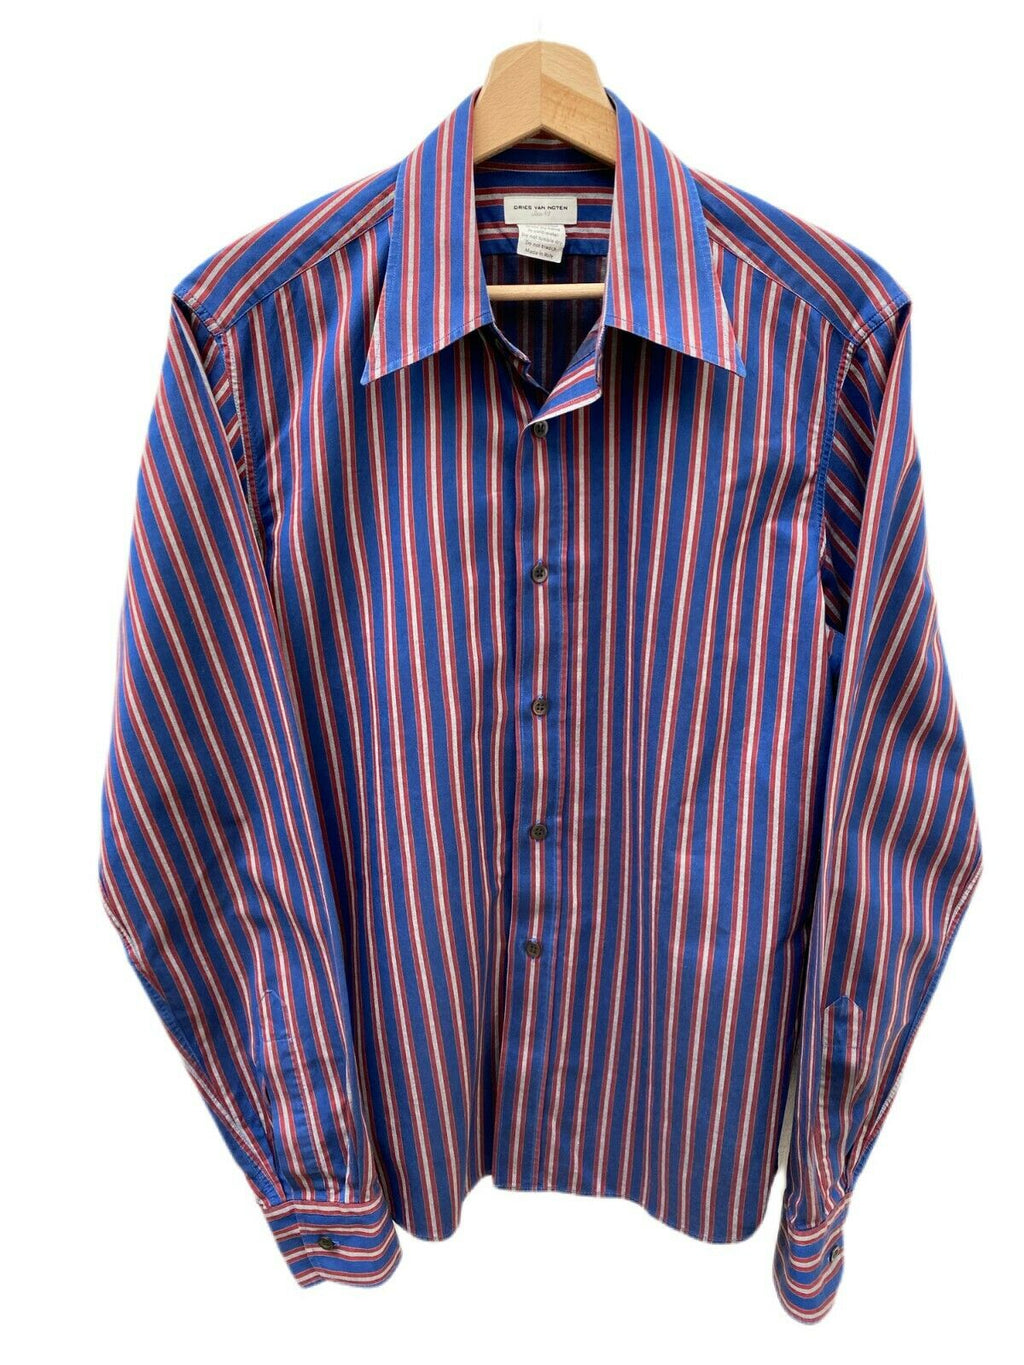 Dries Van Noten Striped Shirt Size M